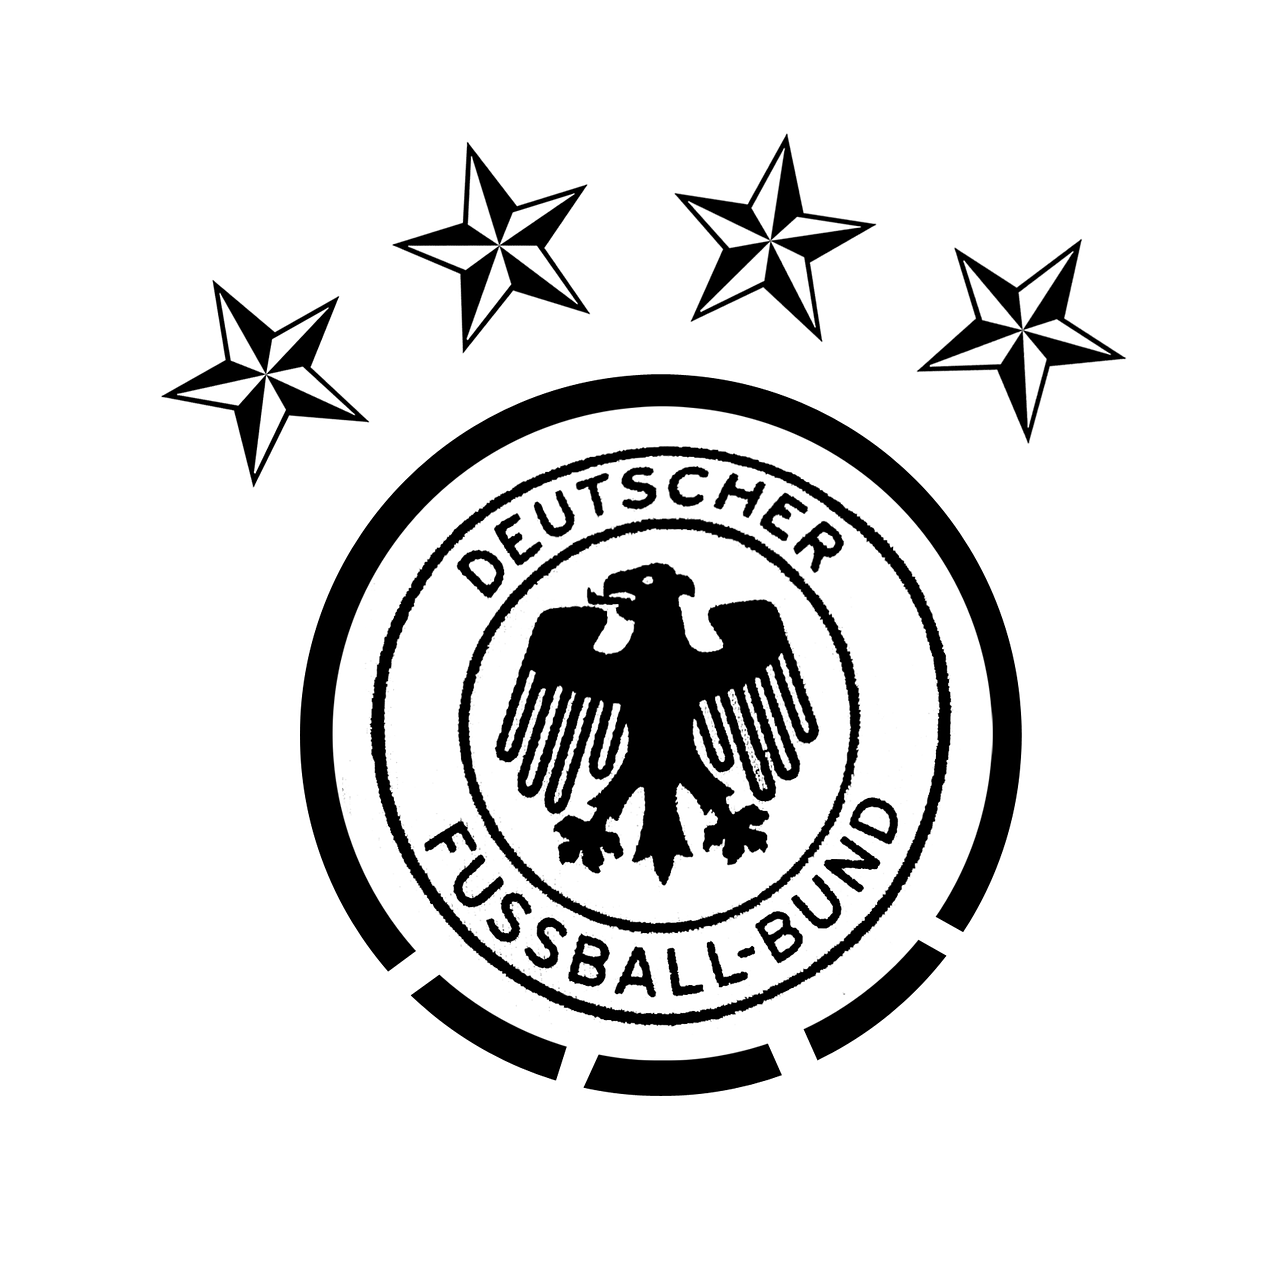 Dfb,coat of arms,star,logo,german football - free image from needpix.com